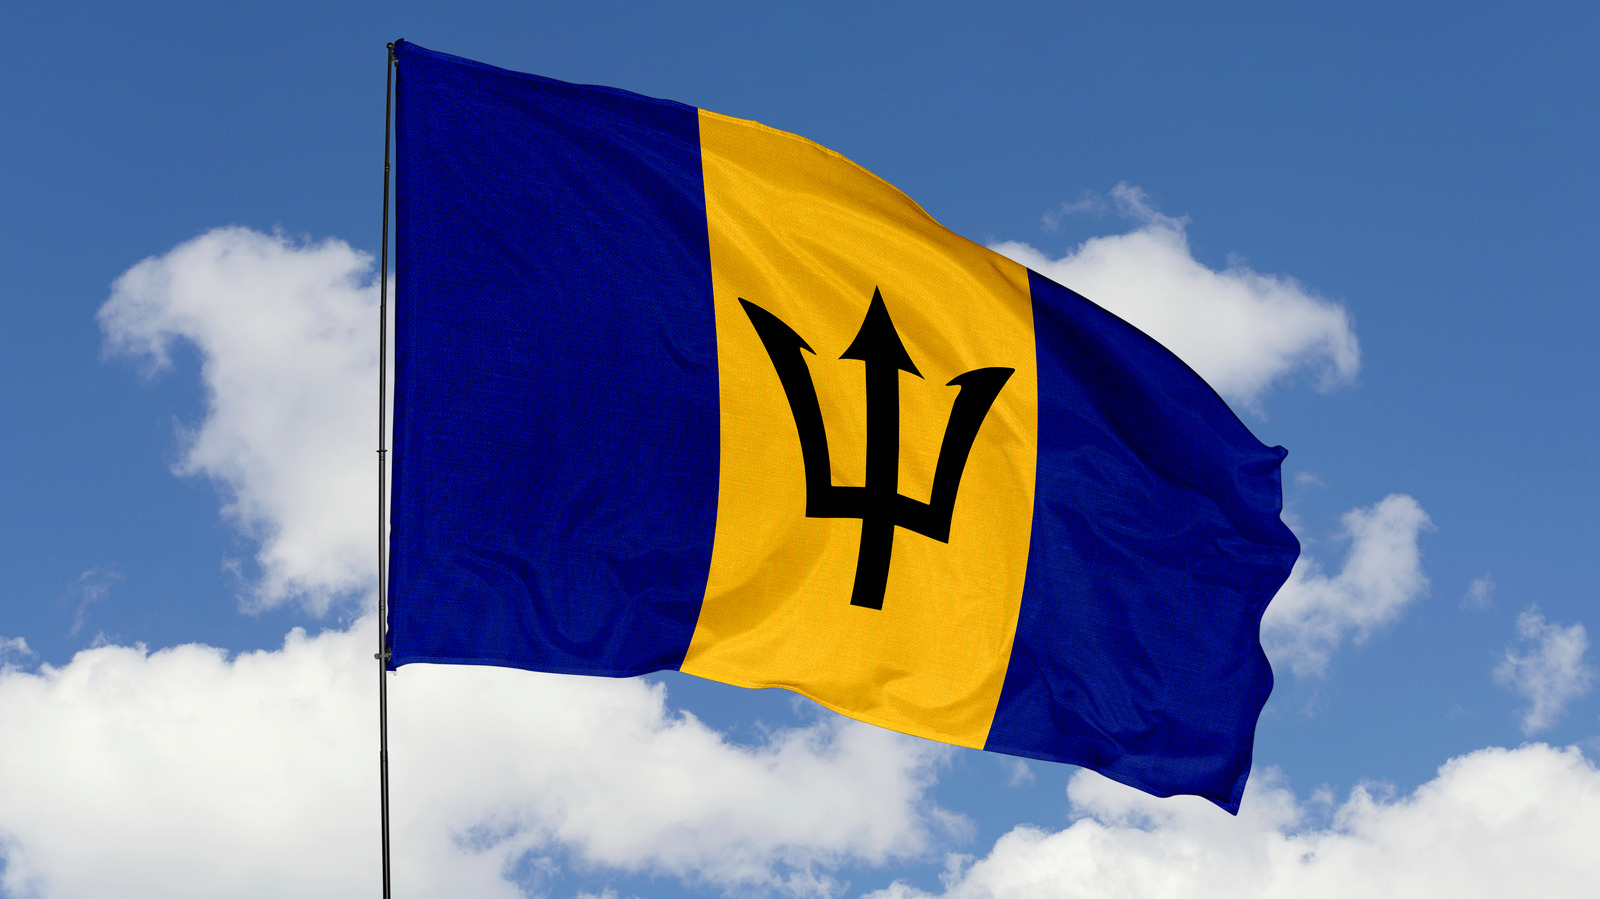 Барбадос флаг. Флаг Барбадоса. Флаг с трезубцем. Барбадос флаг фото. Флаг синий желтый синий с трезубцем.